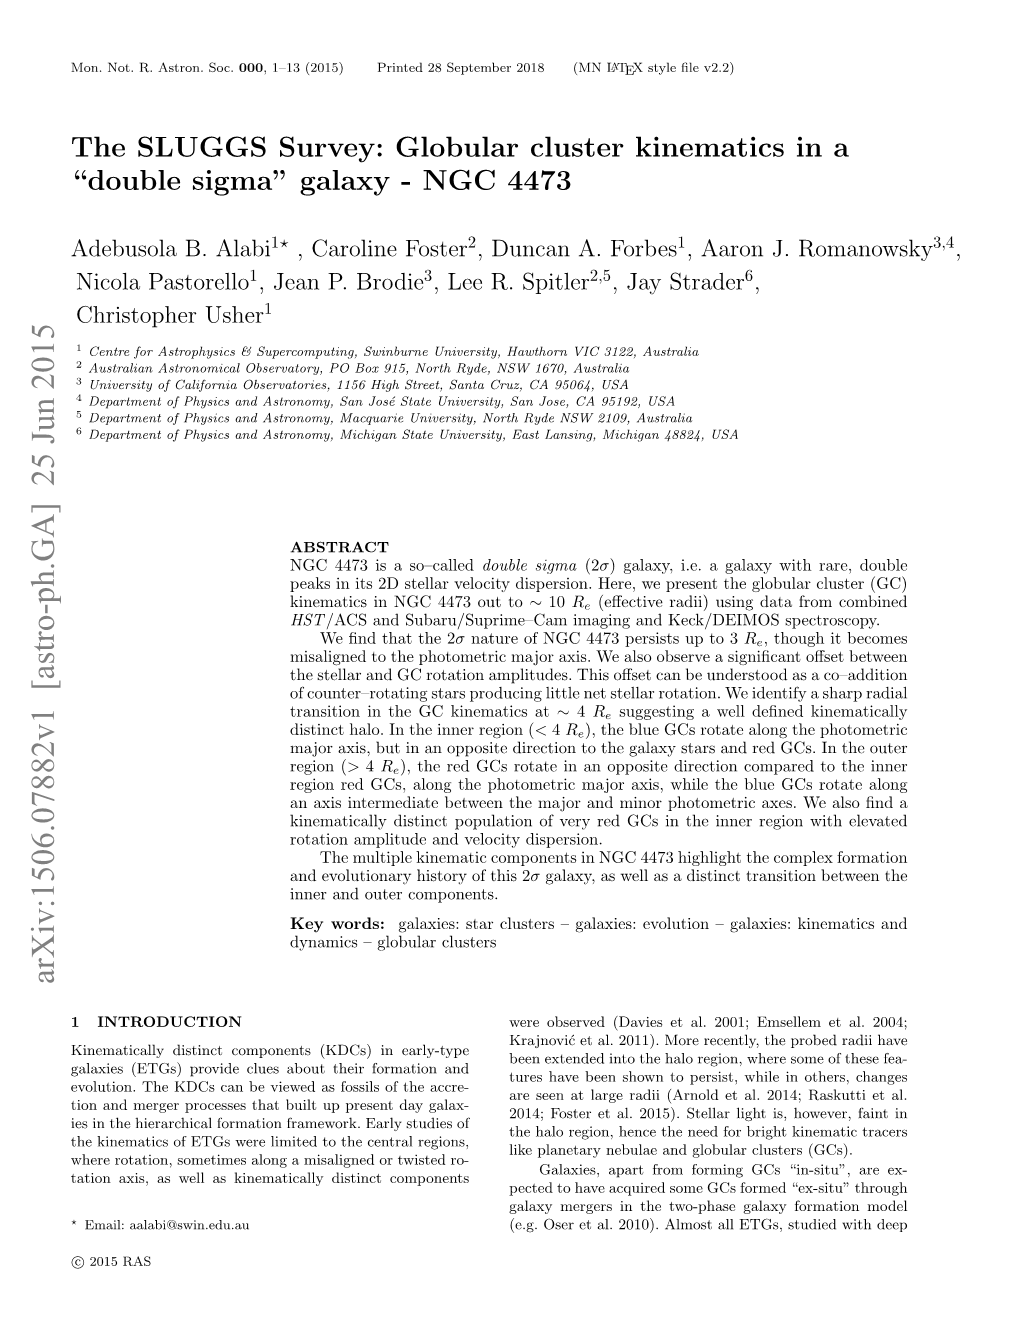 The SLUGGS Survey: Globular Cluster Kinematics in A" Double Sigma